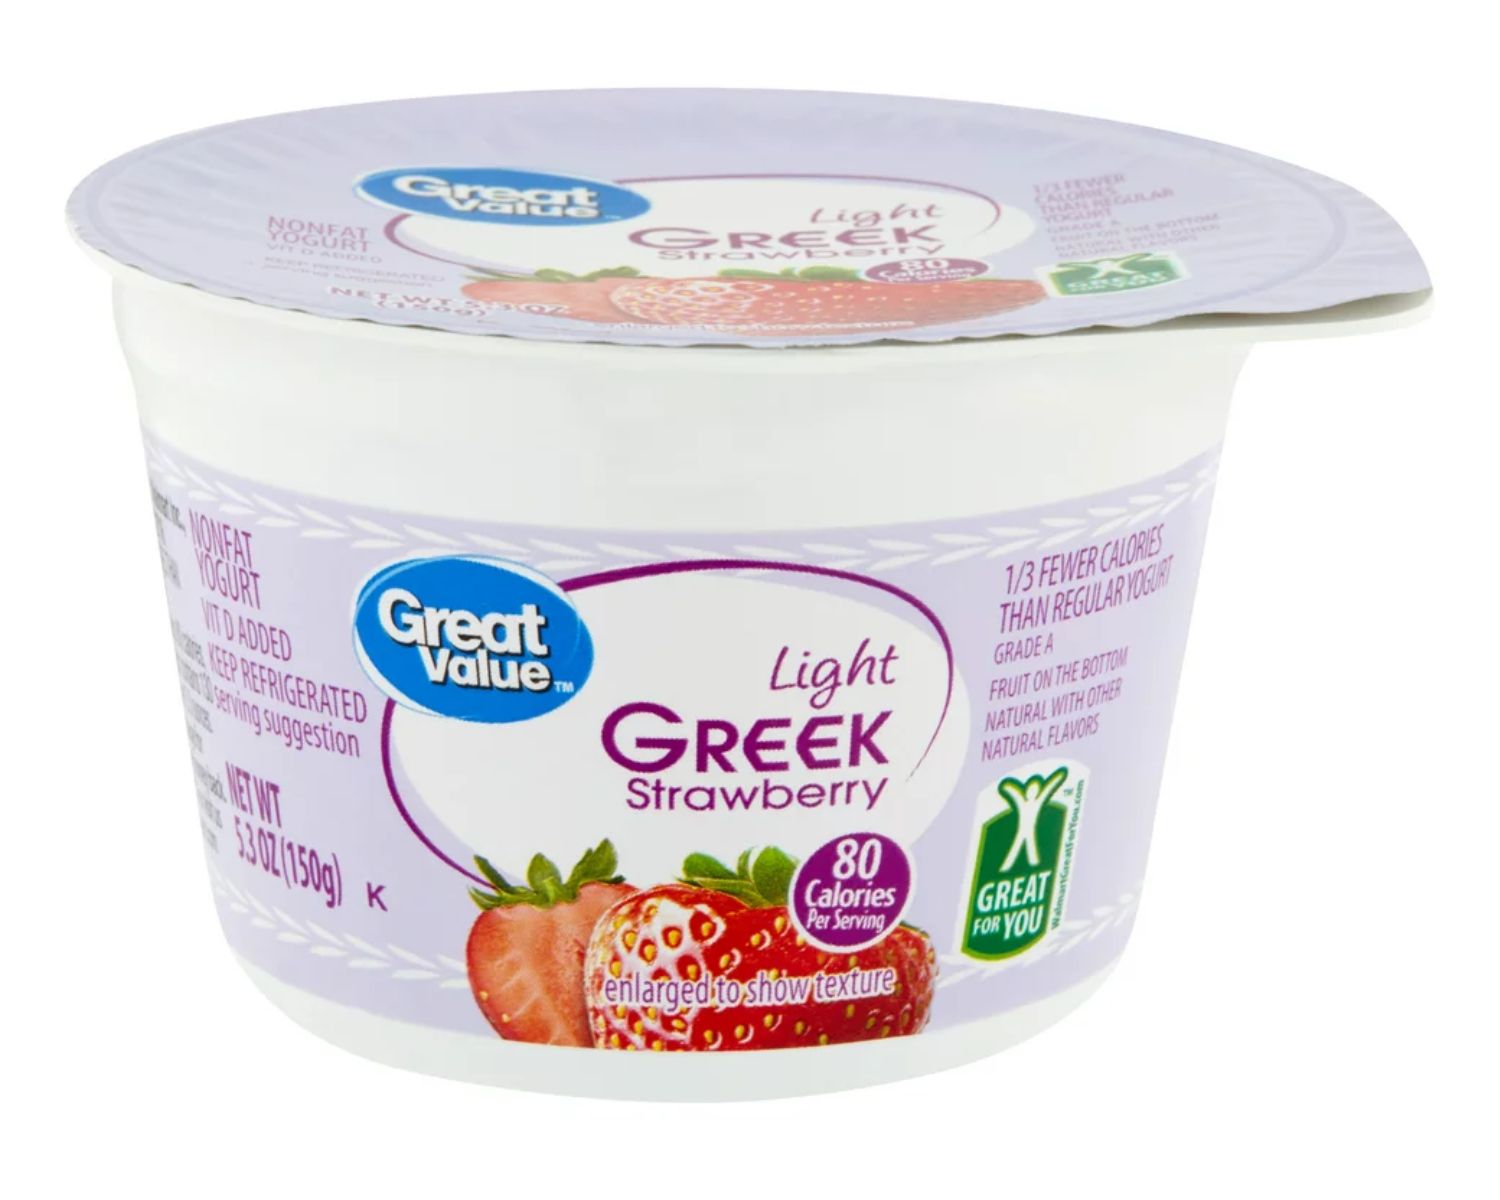 15-great-value-nonfat-yogurt-nutrition-facts